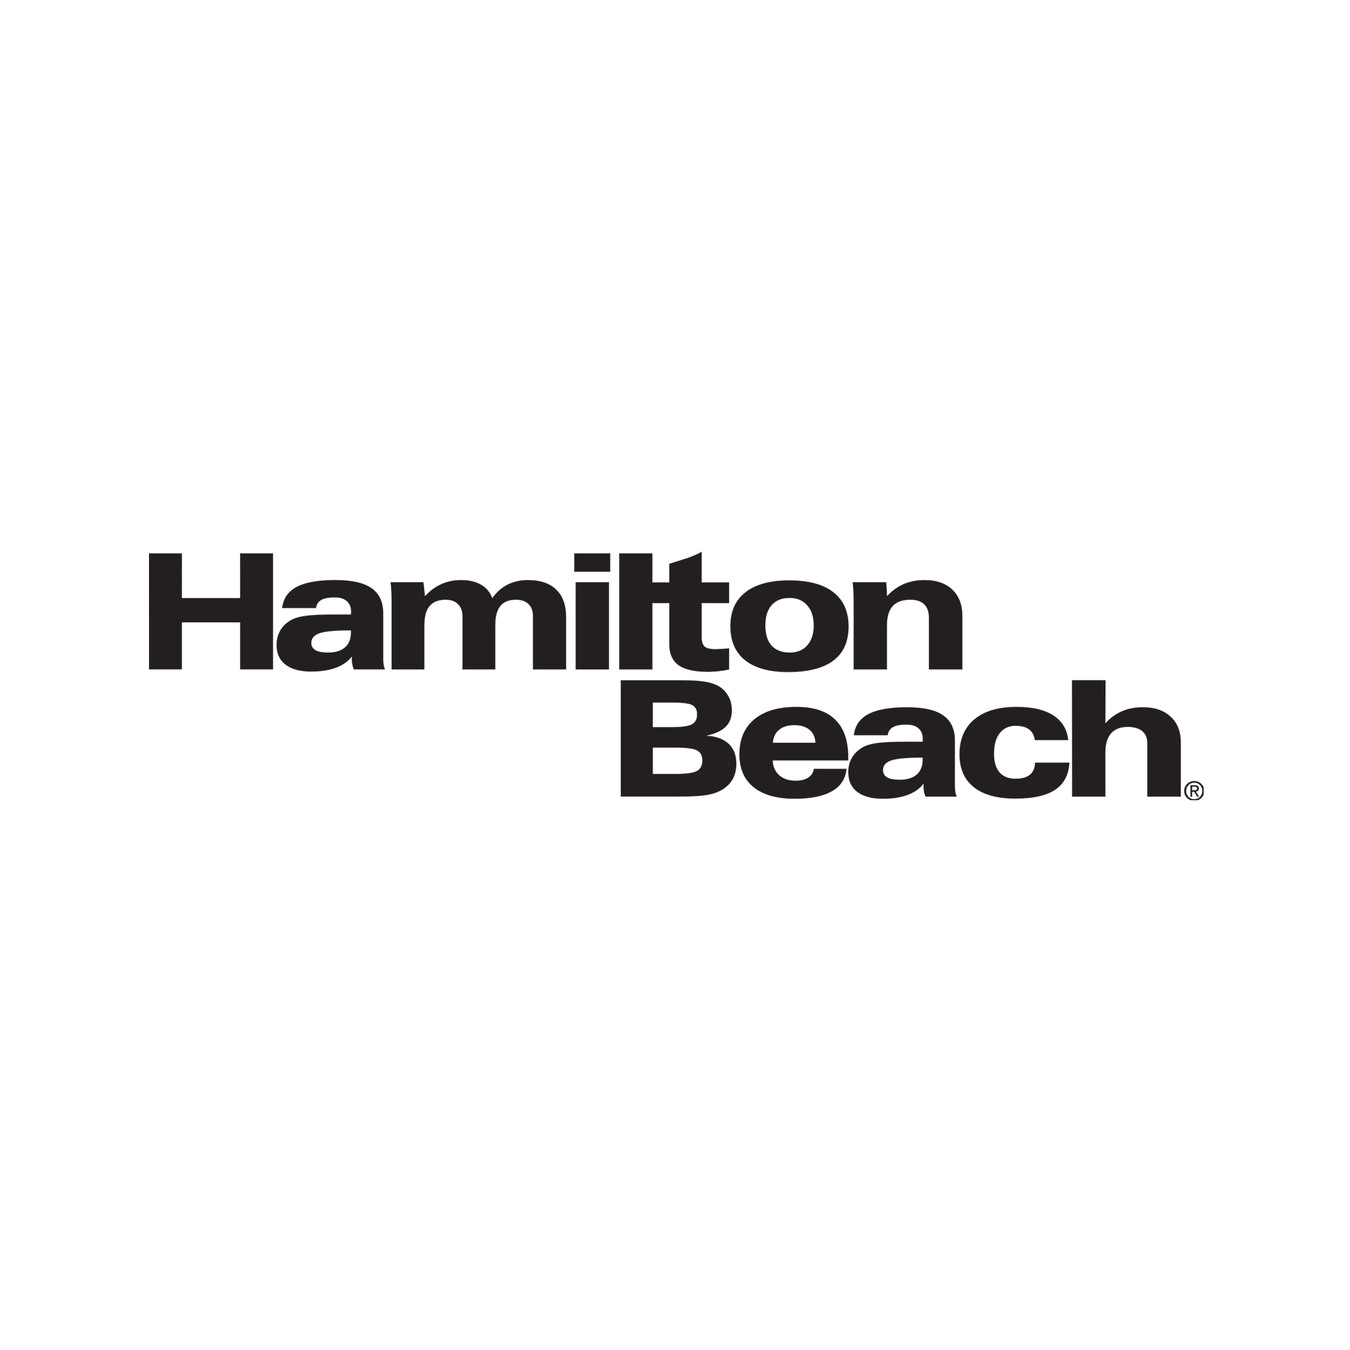 Hamilton Beach - Gecko Catering Equipment